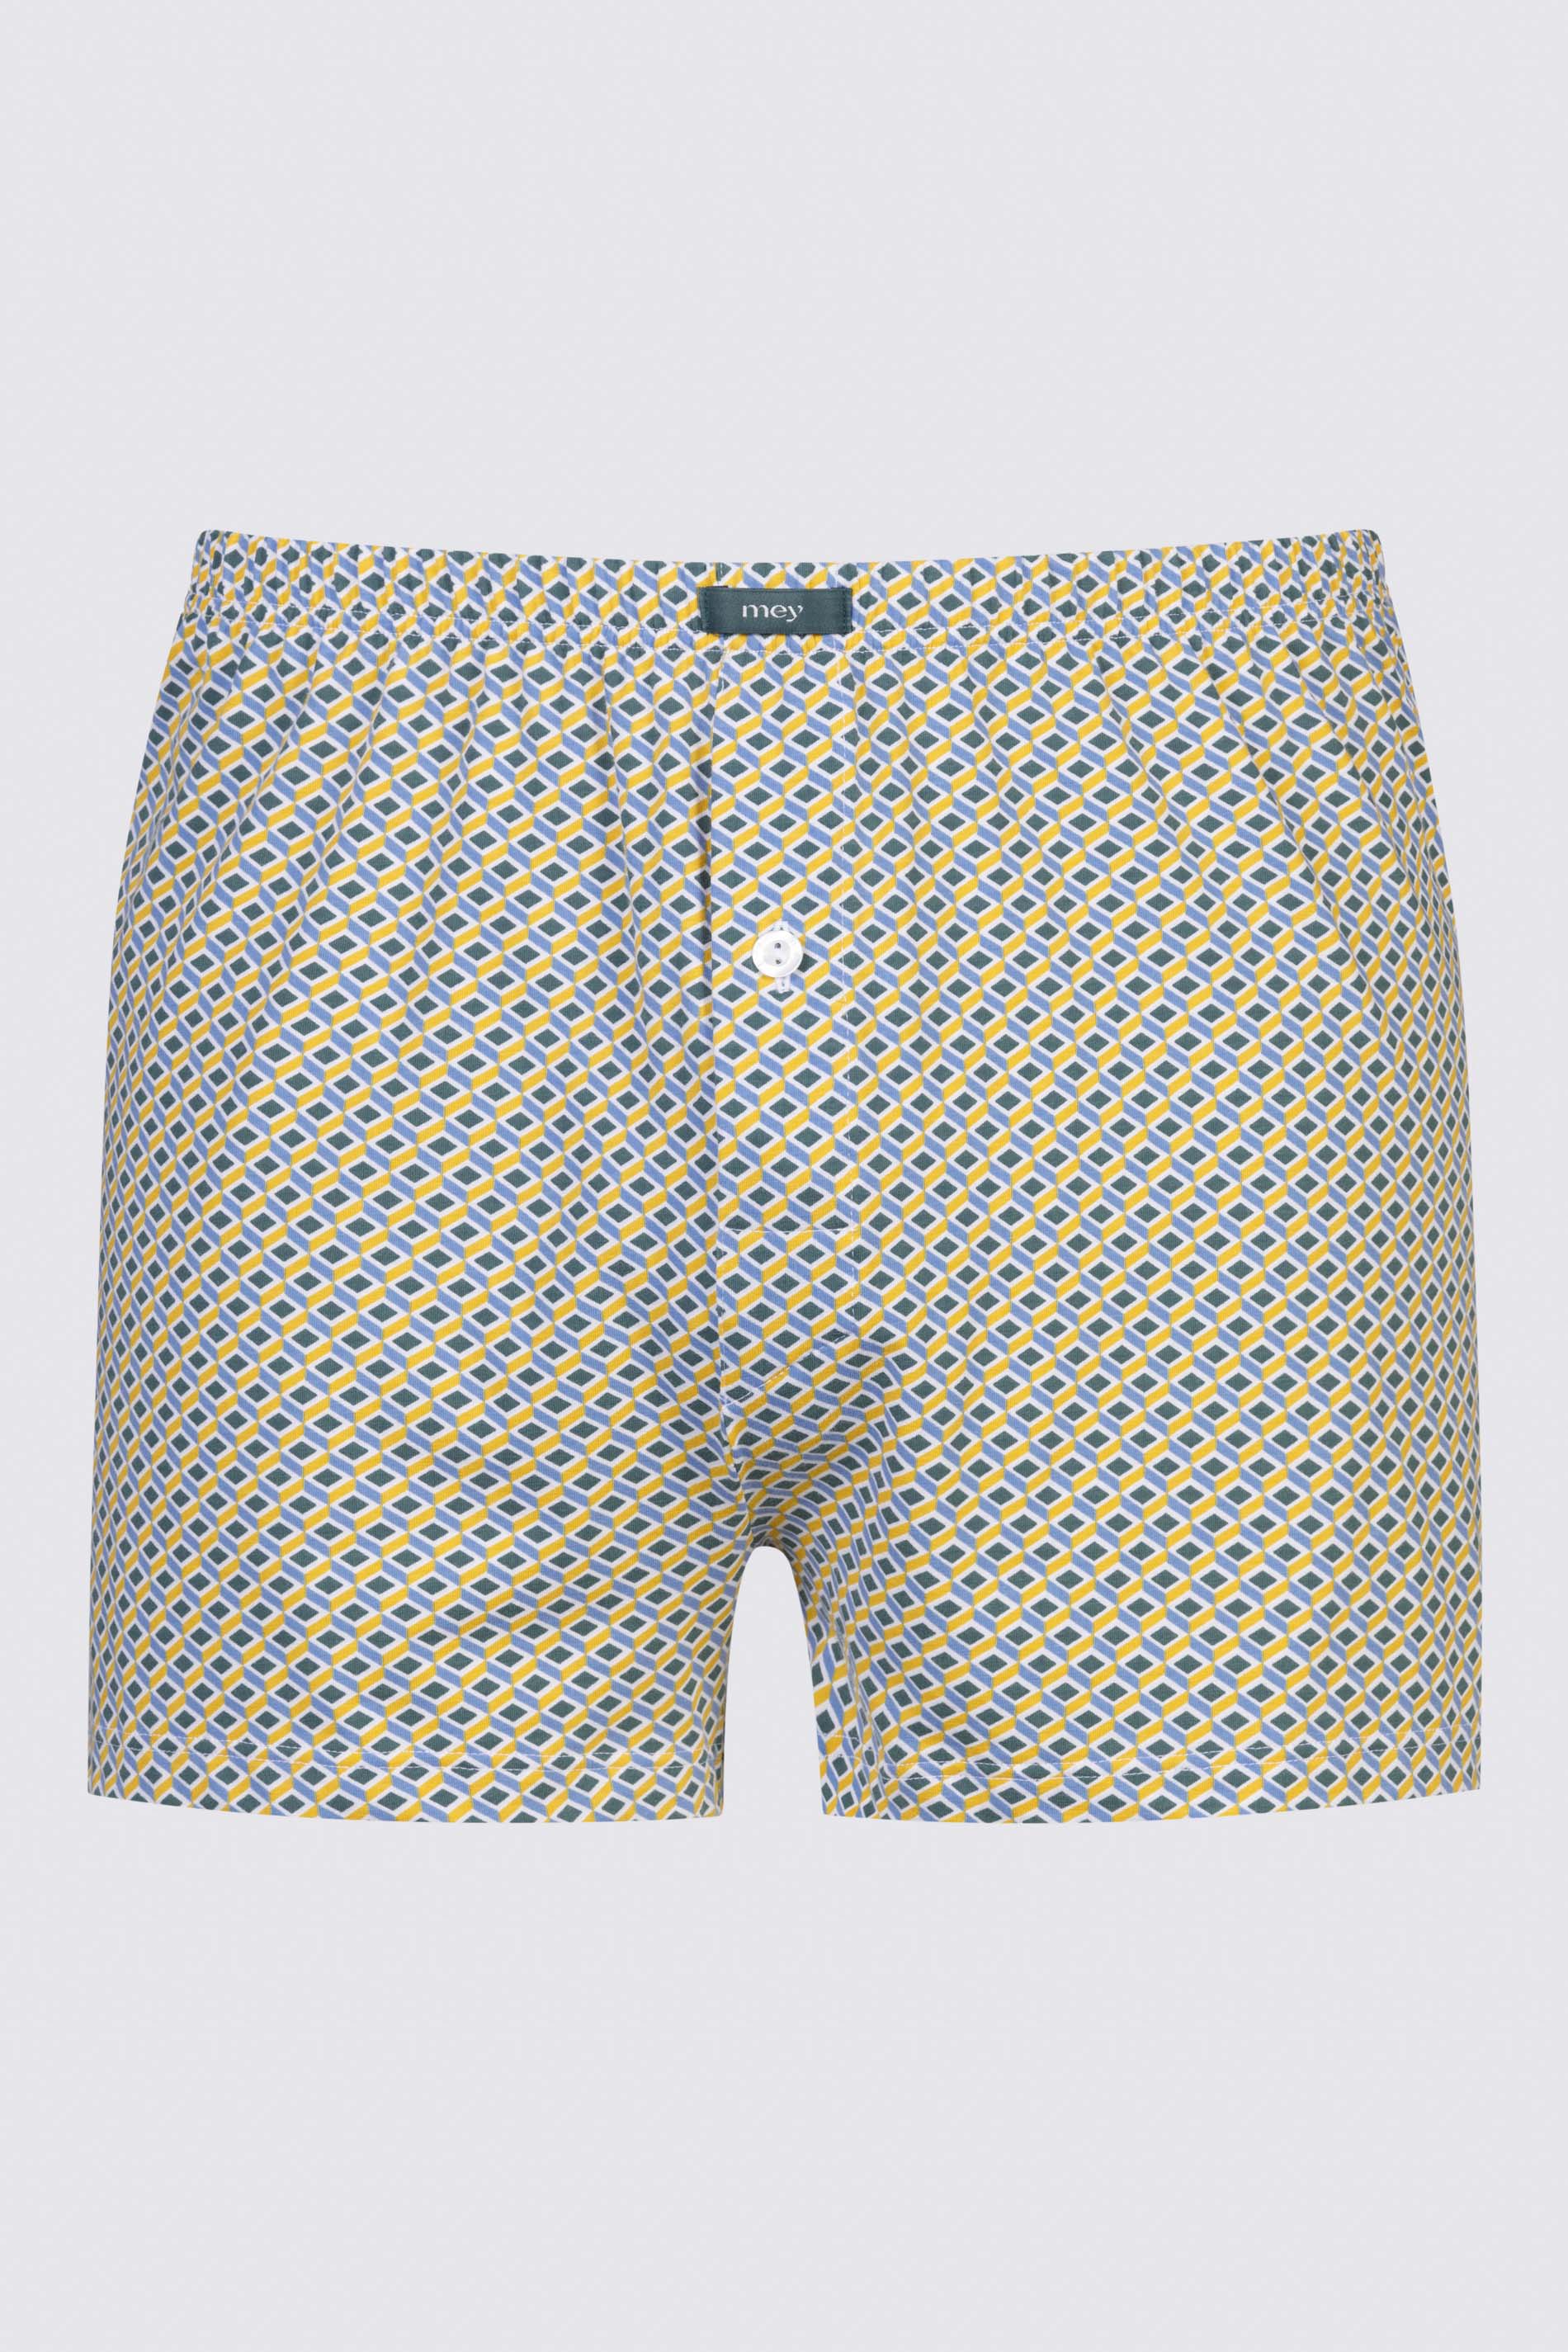 Boxer shorts Serie Cube Cut Out | mey®